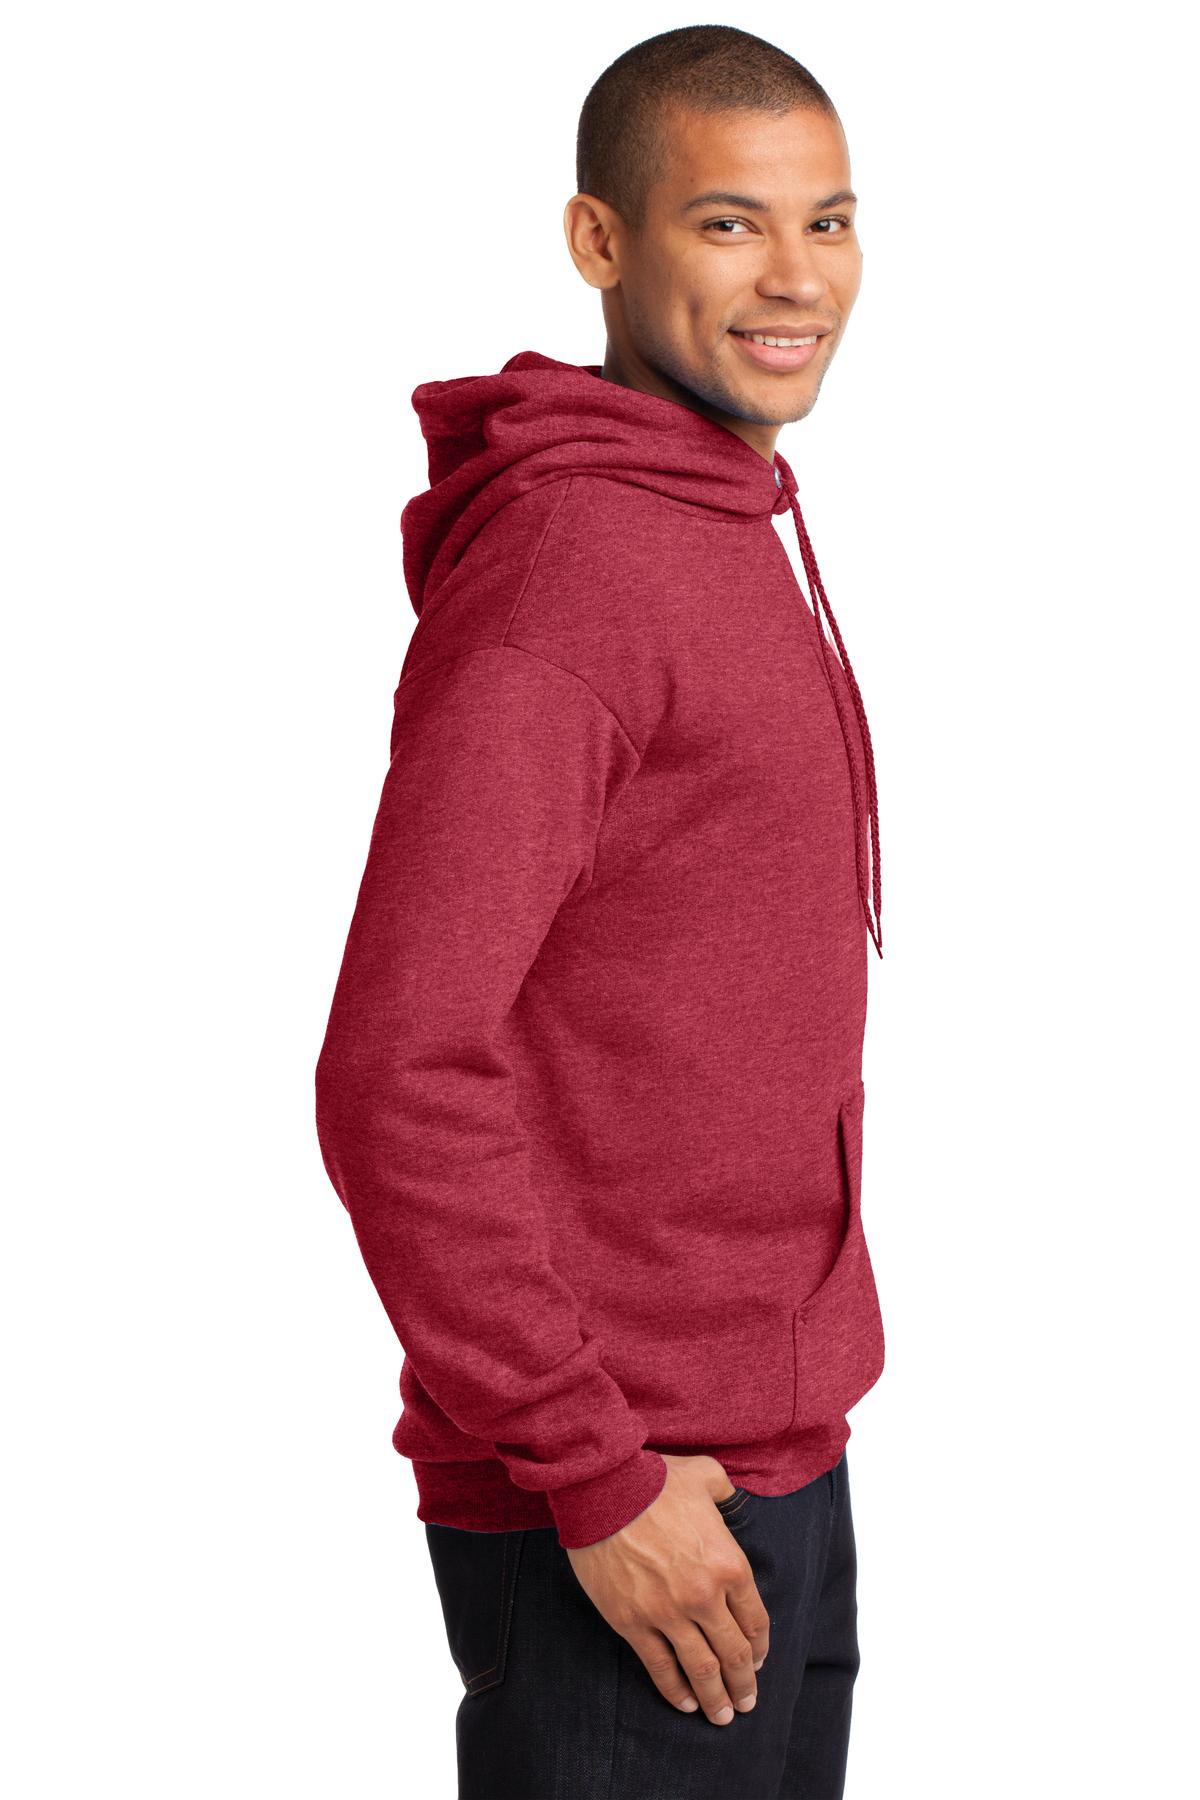 Port & Company® - Core Fleece Pullover Hooded Sweatshirt. PC78H [Heather Red] - DFW Impression